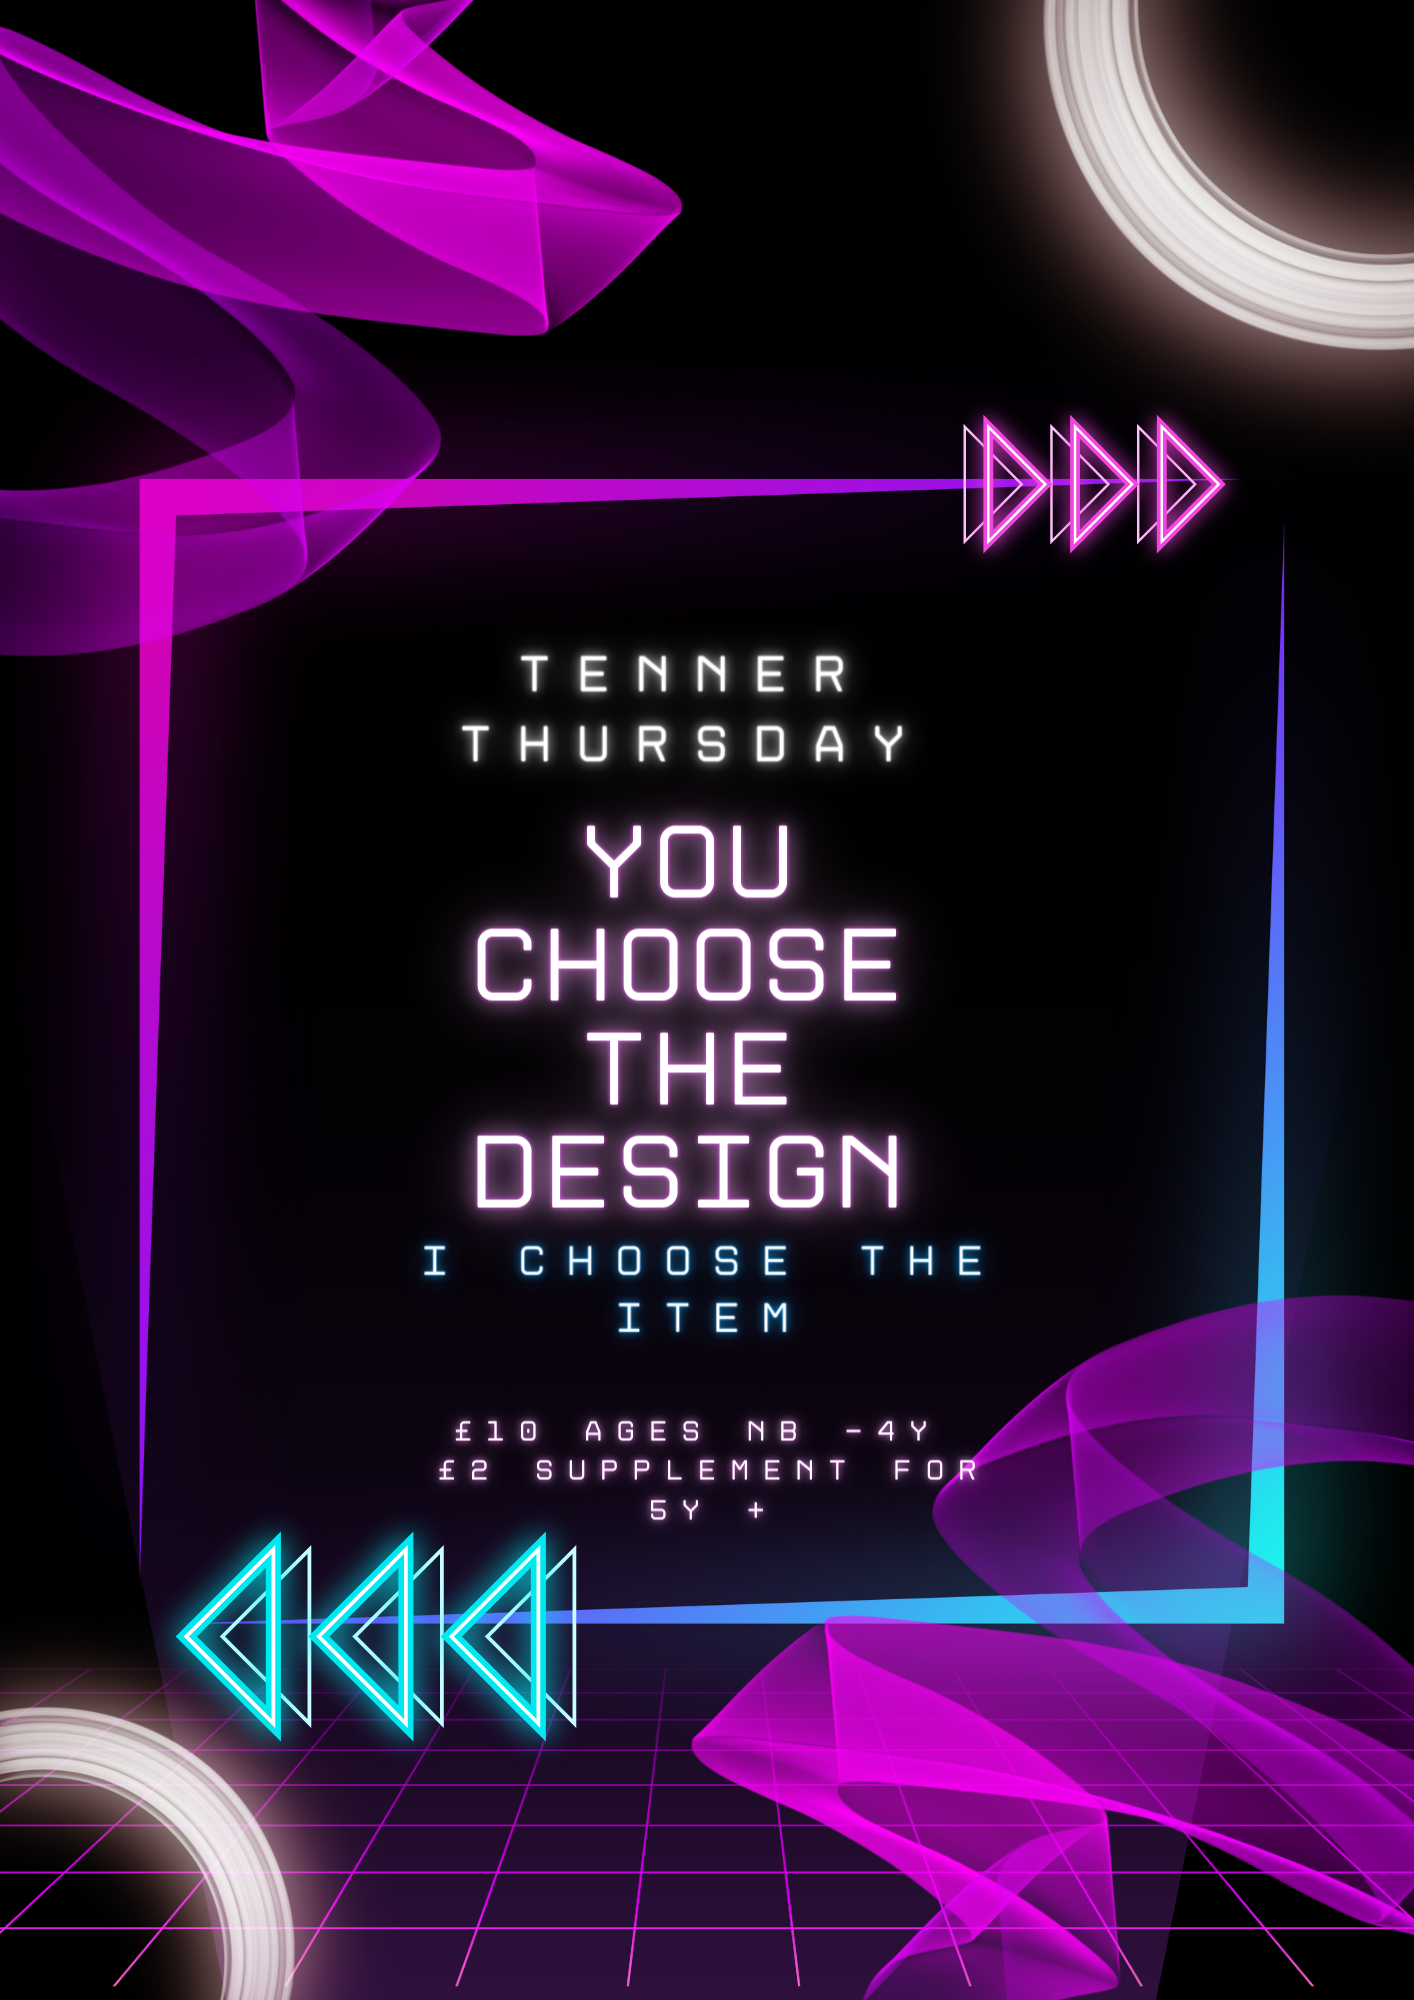 Tenner Thursday -  You choose the design - We choose the item